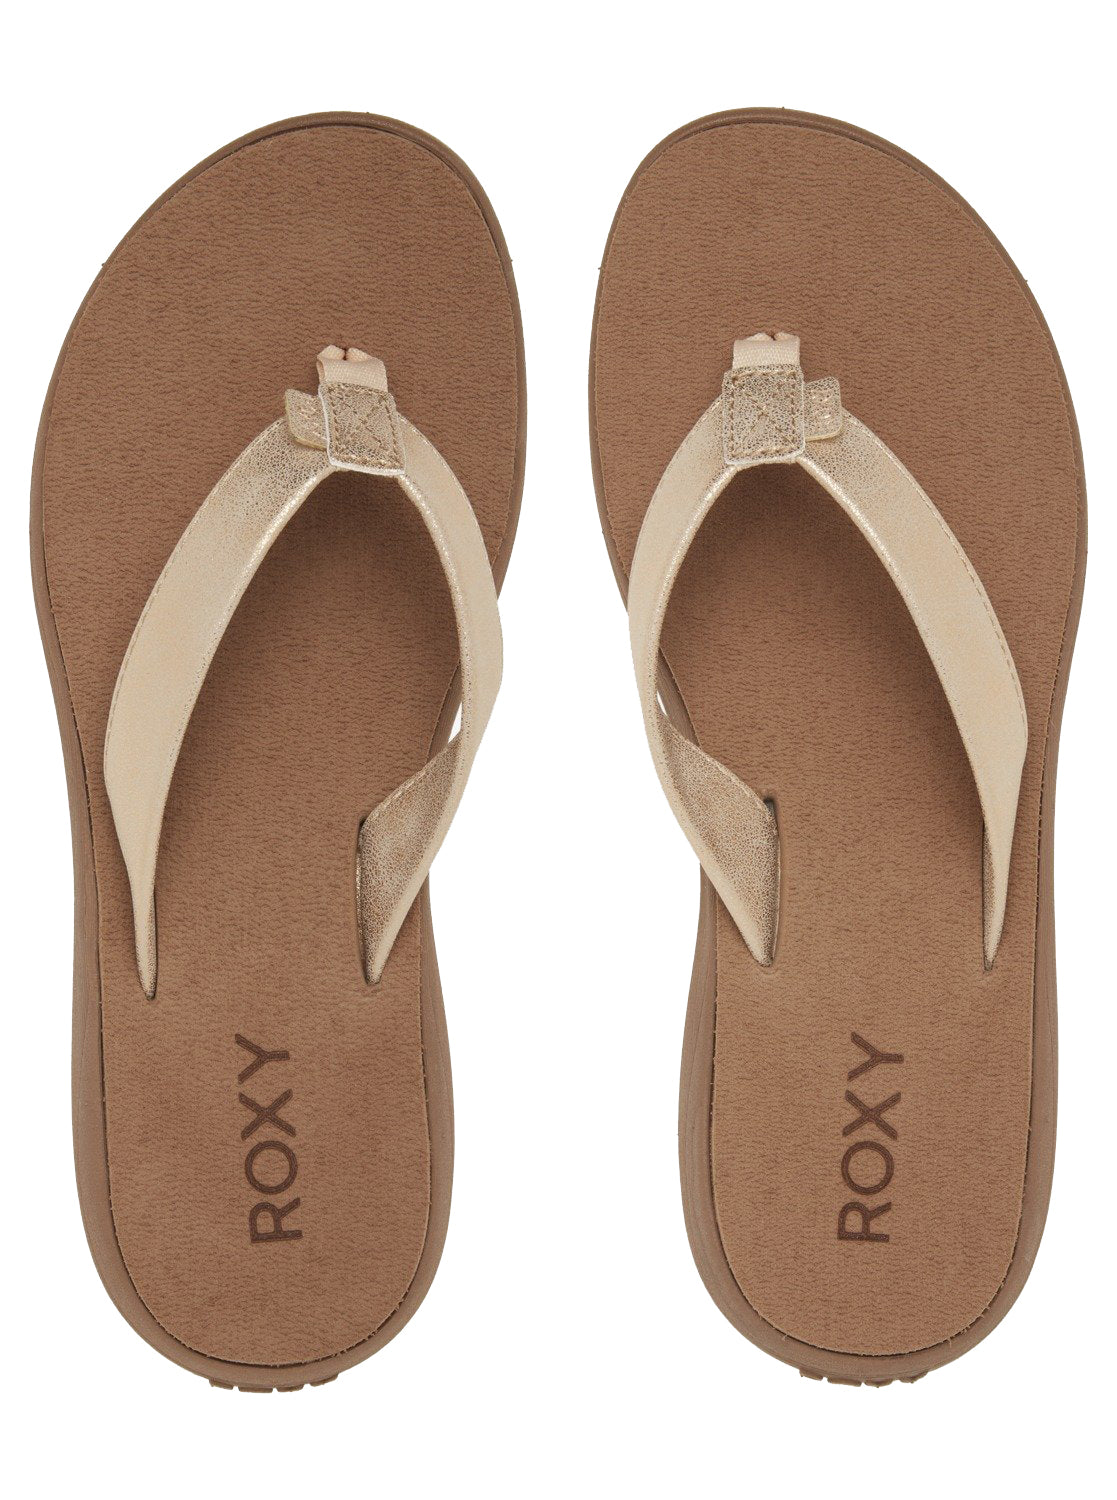 Roxy Lizzie Womens Sandal BRO-Bronze 10